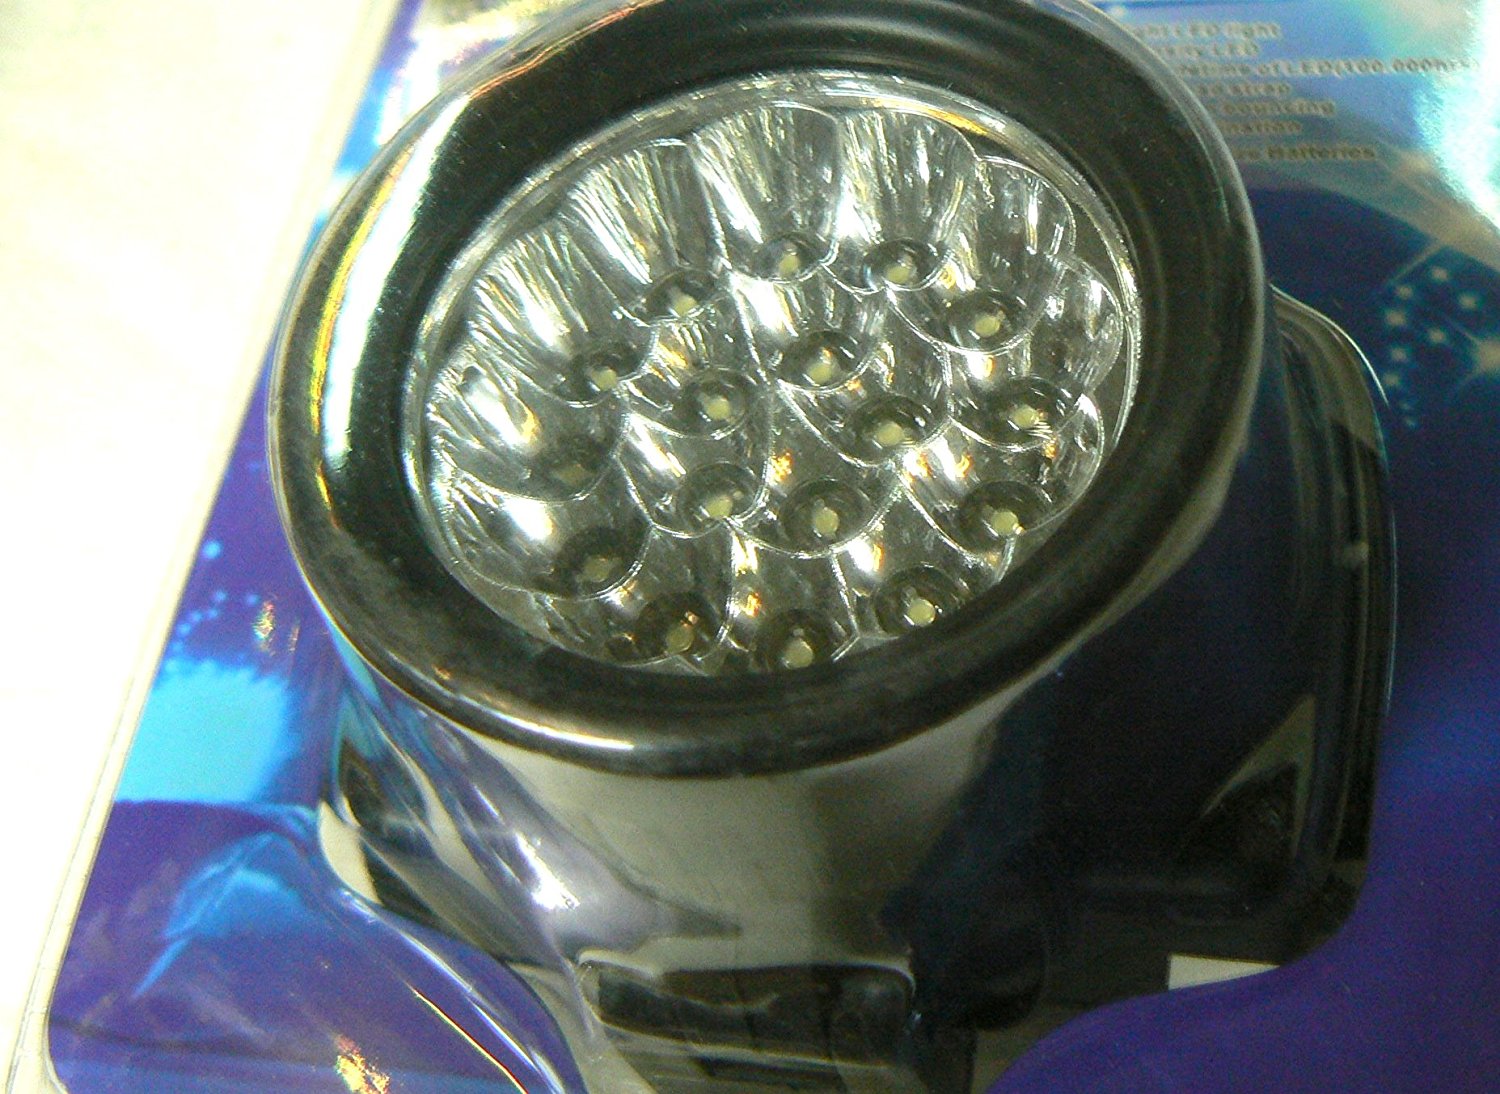 TORCIA FRONTALE LUCE 18-20 LED.